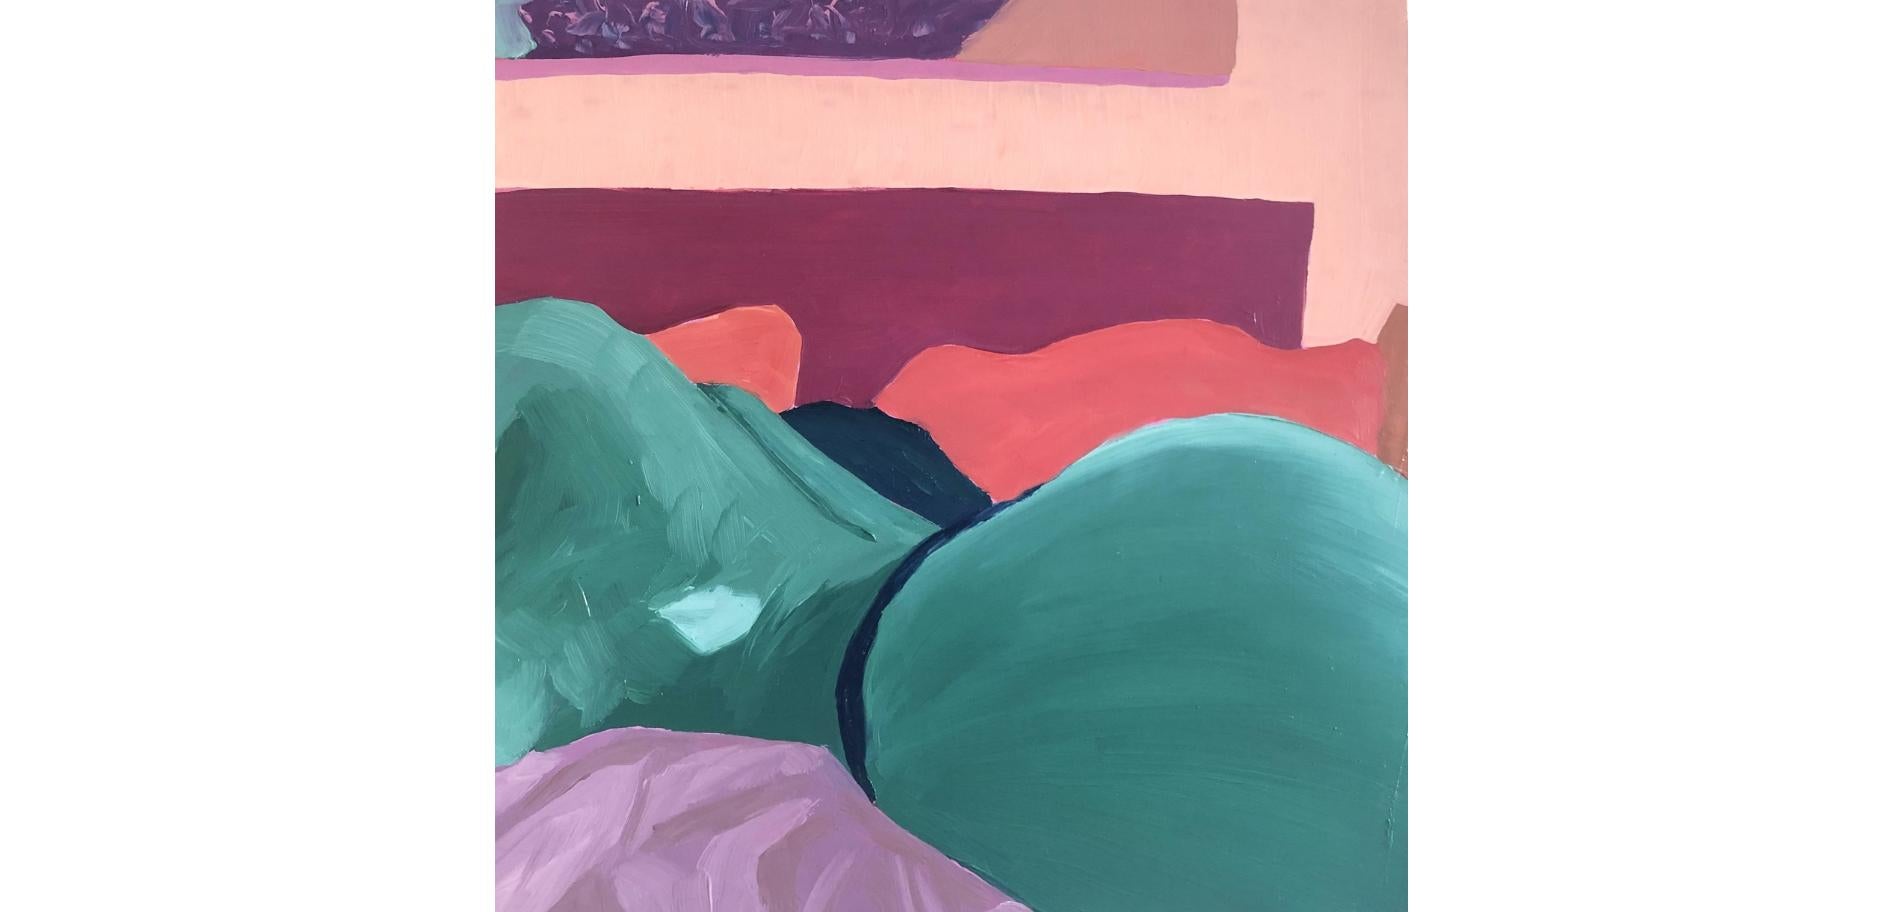 Ray (2020), figurative pink, purple, aqua & blue nude oil on wood panel painting - Painting by Jessica Rubin